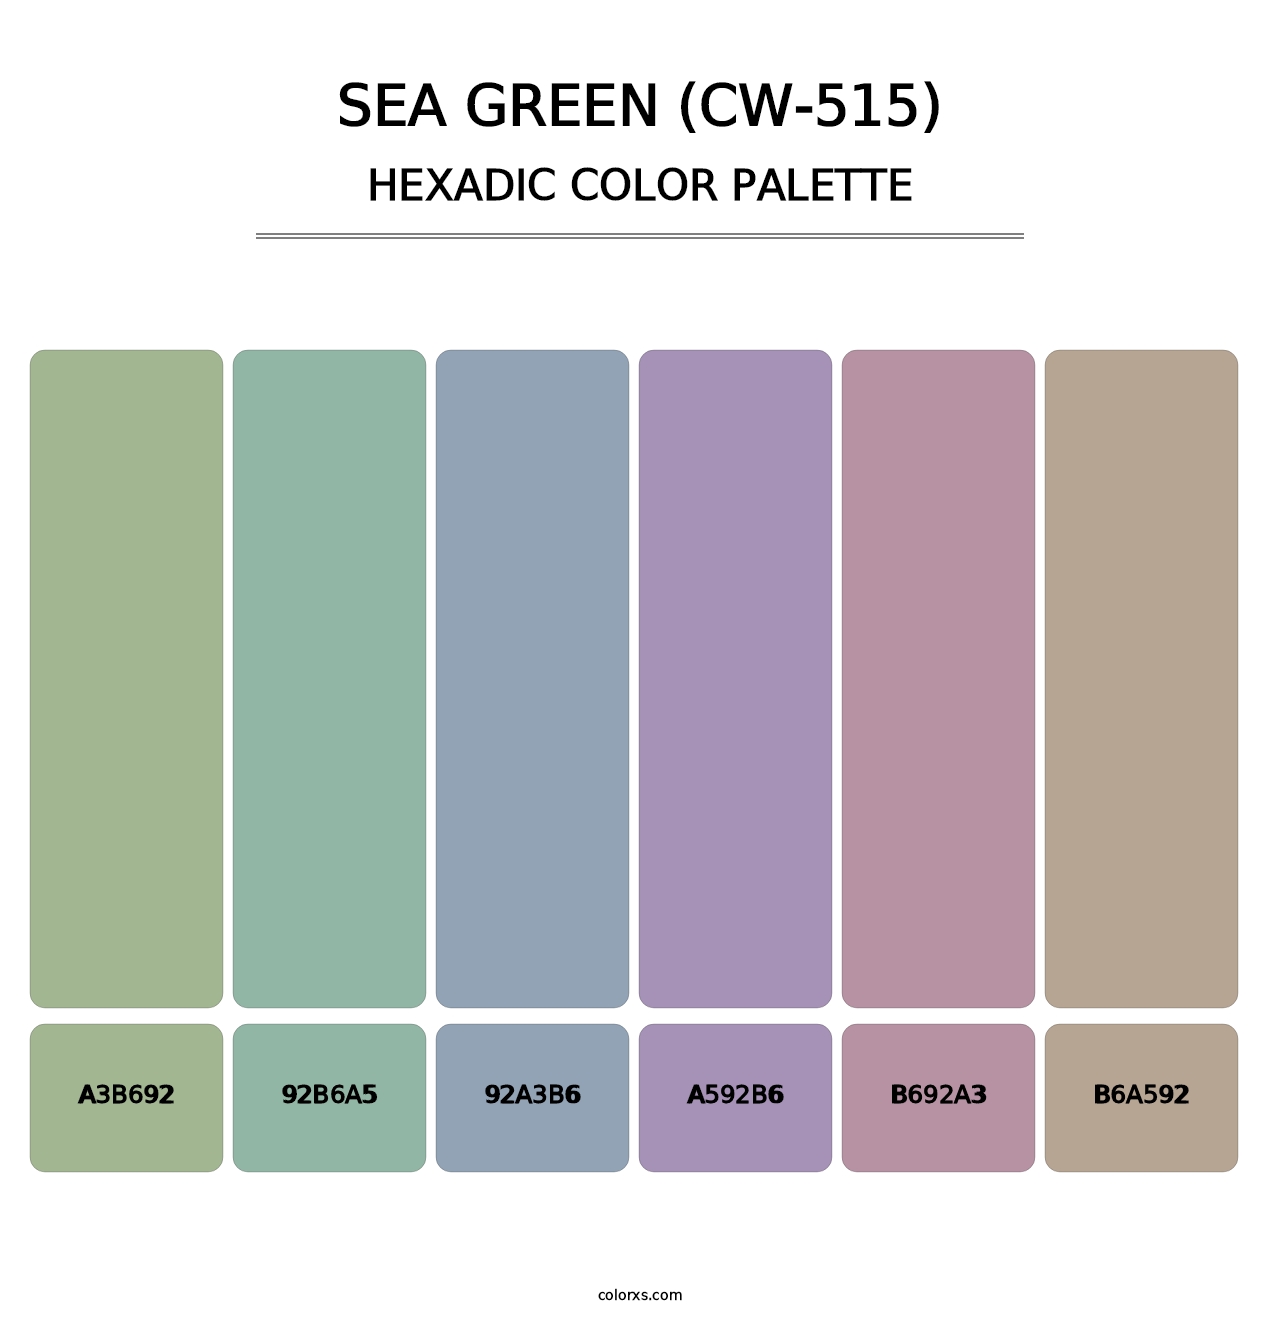 Sea Green (CW-515) - Hexadic Color Palette